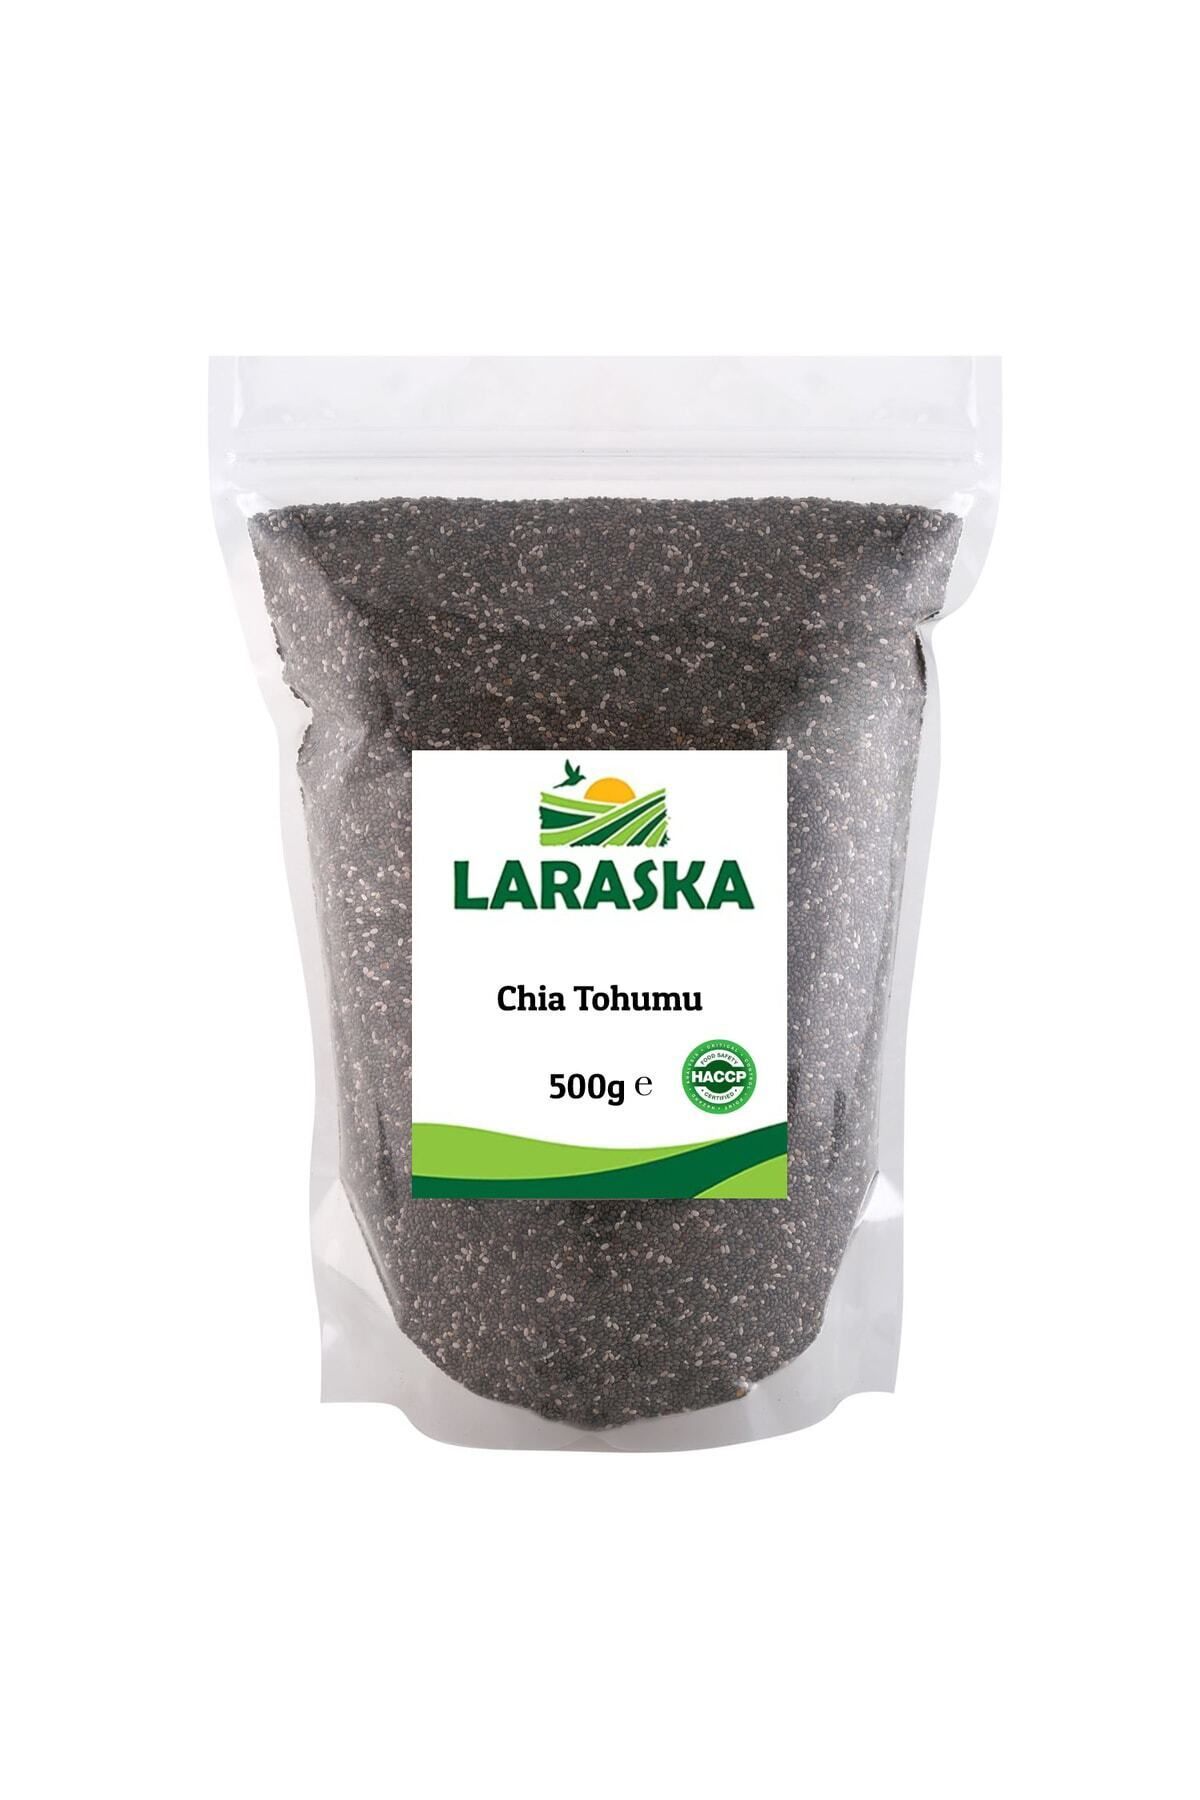 Laraska Chia Tohumu 500g - Çiya Tohumu 500g Chia Seeds 500g